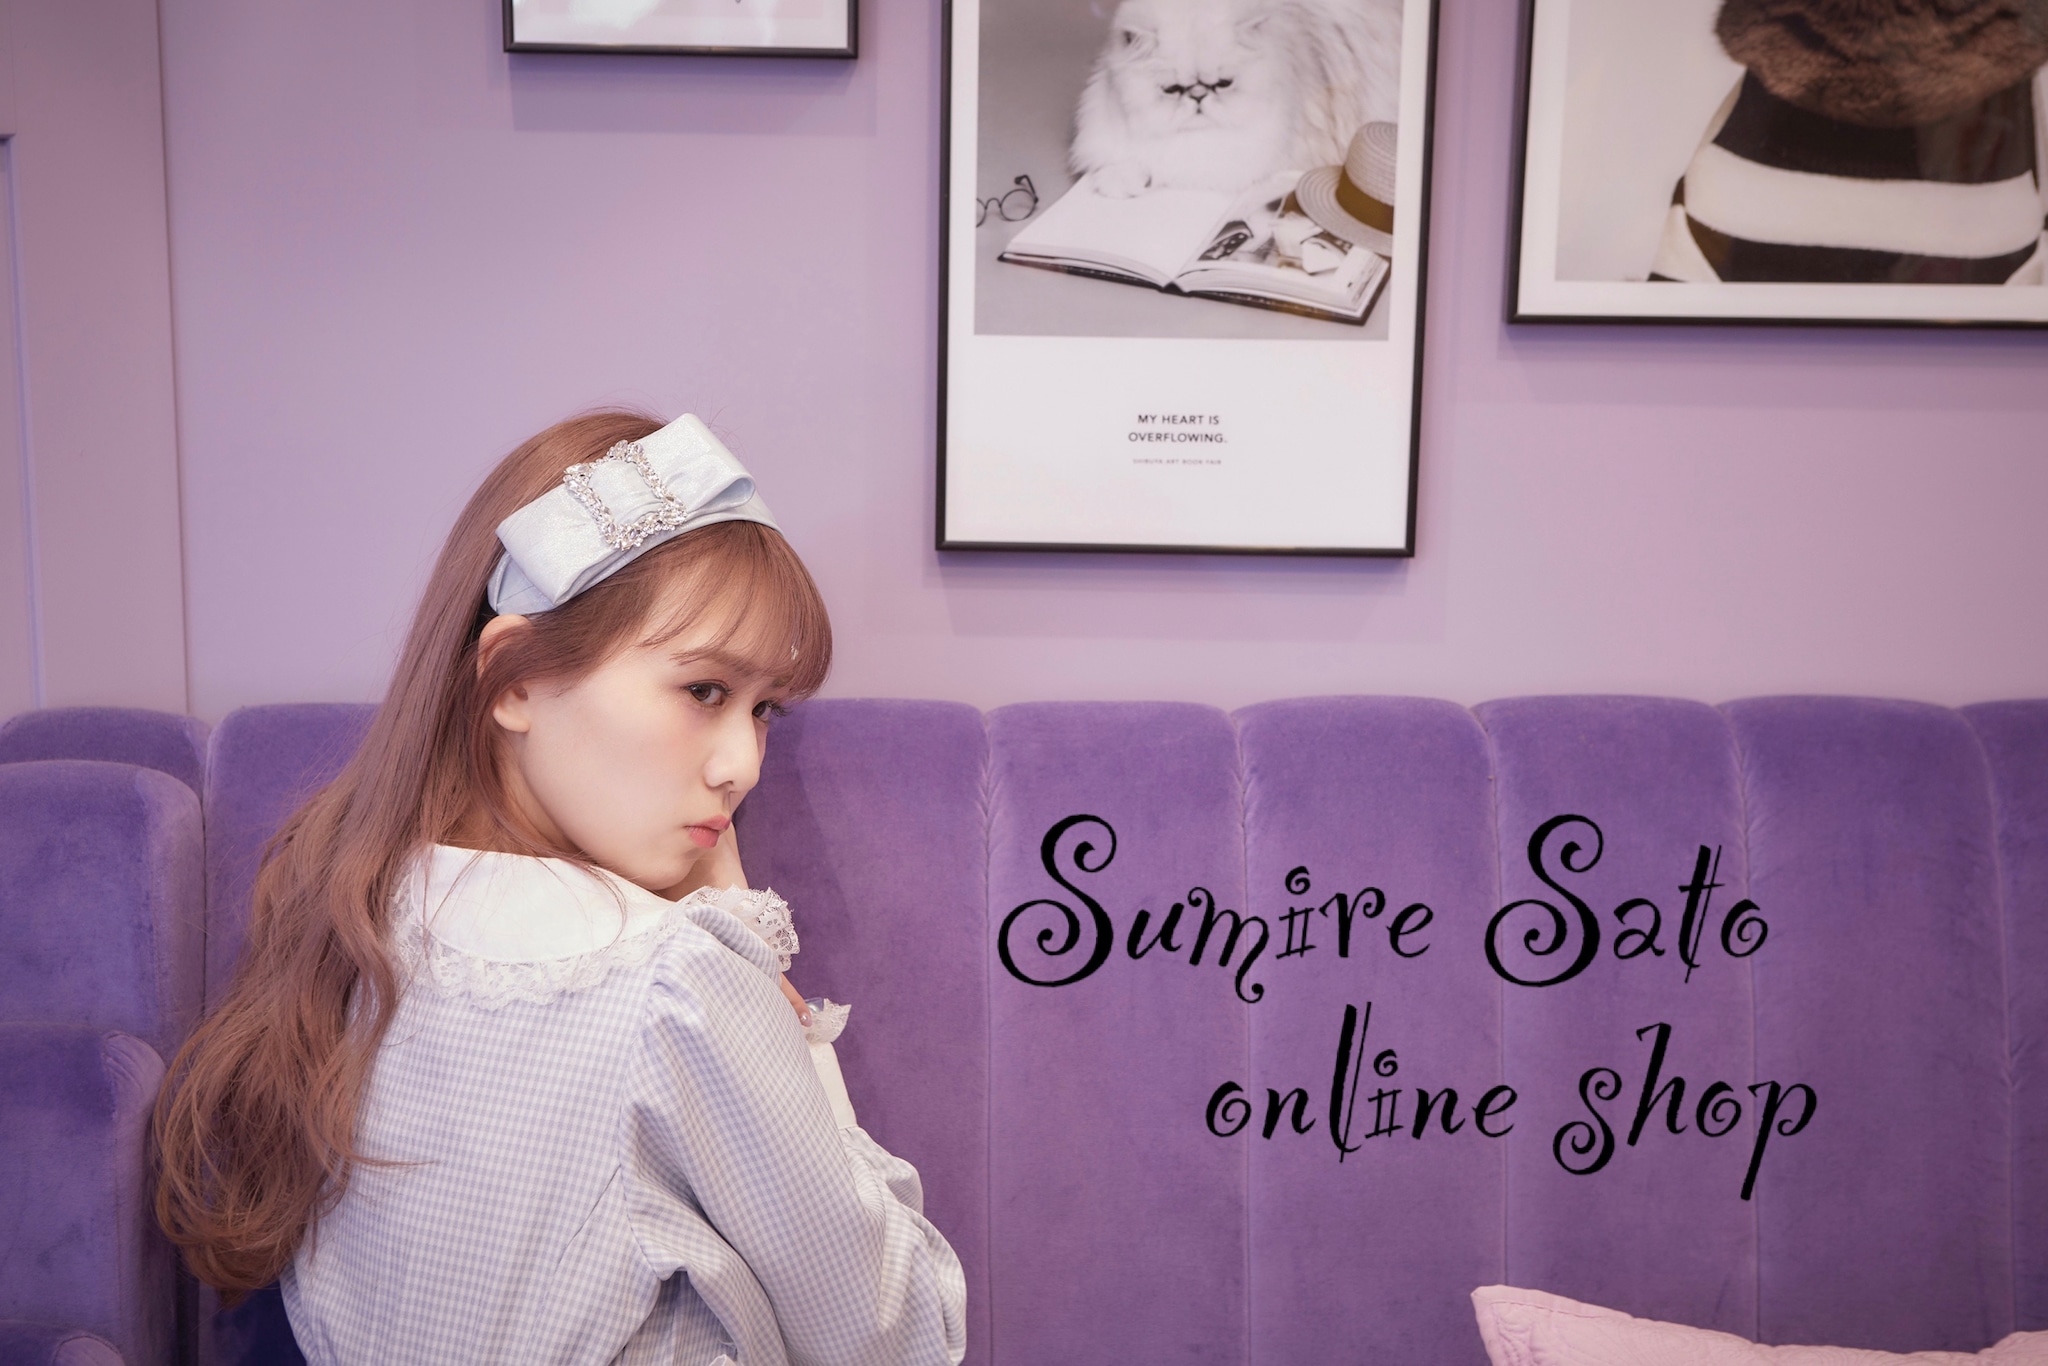 Sumire Sato online shop